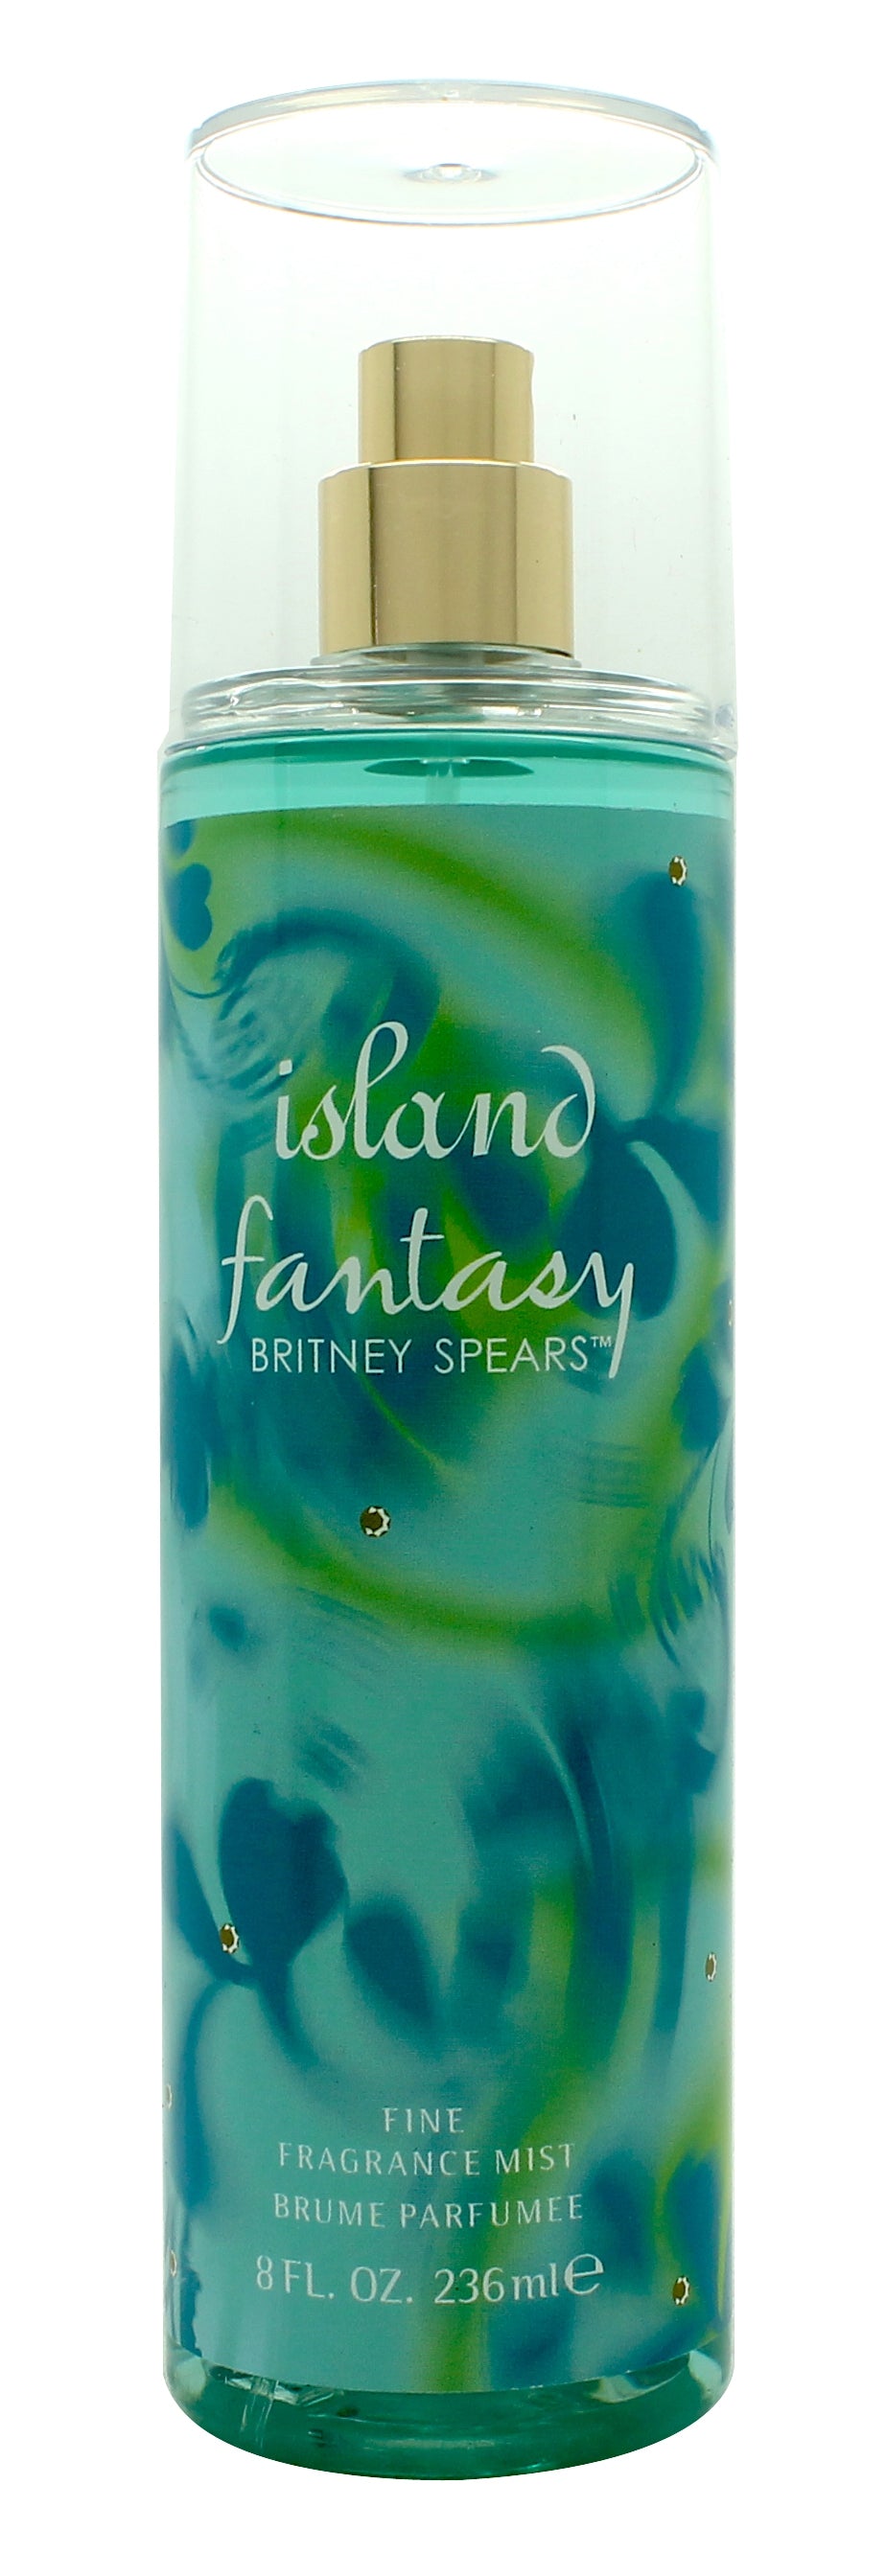 View Britney Spears Island Fantasy Body Mist 235ml Spray information